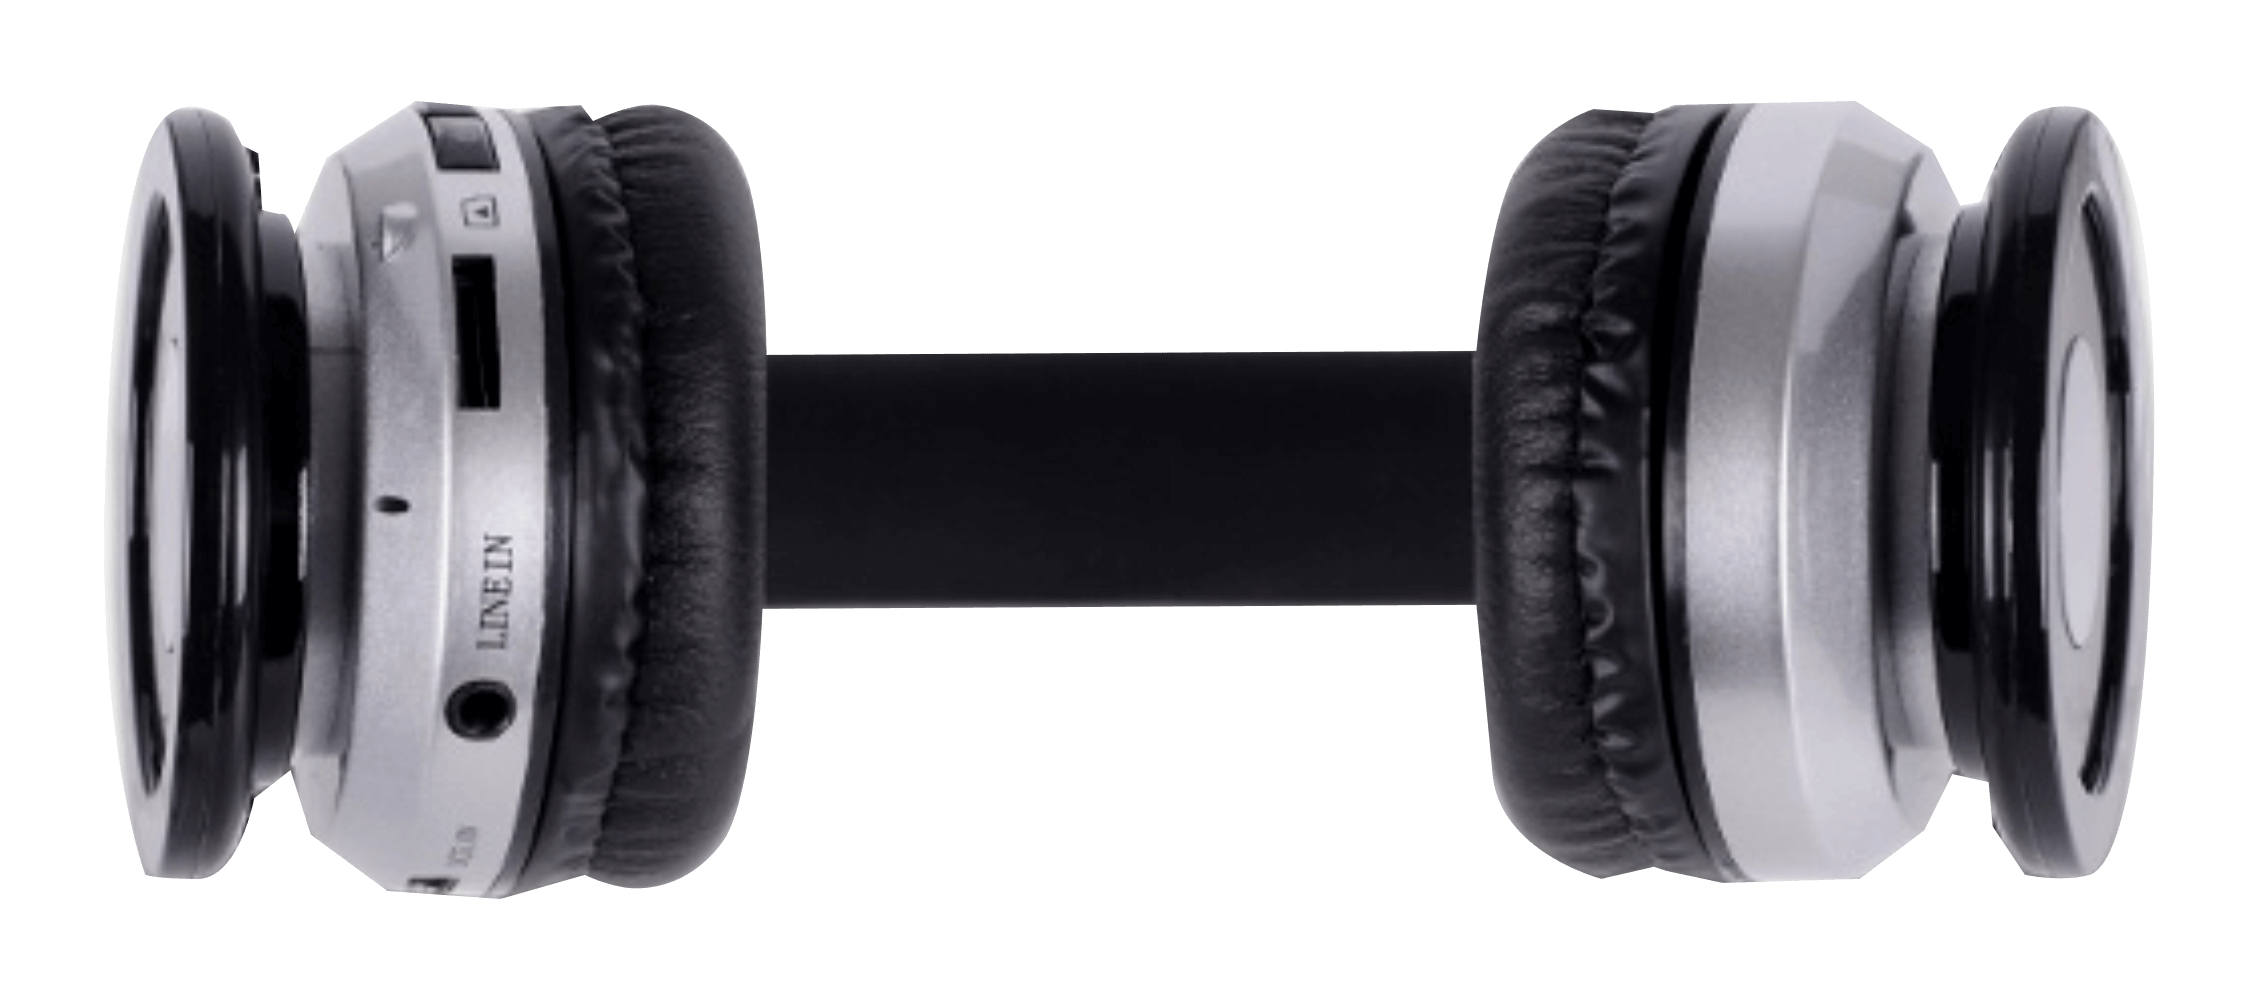 LG K40 (K12 Plus) bluetooth fejhallgató Rebeltec Crystal fekete